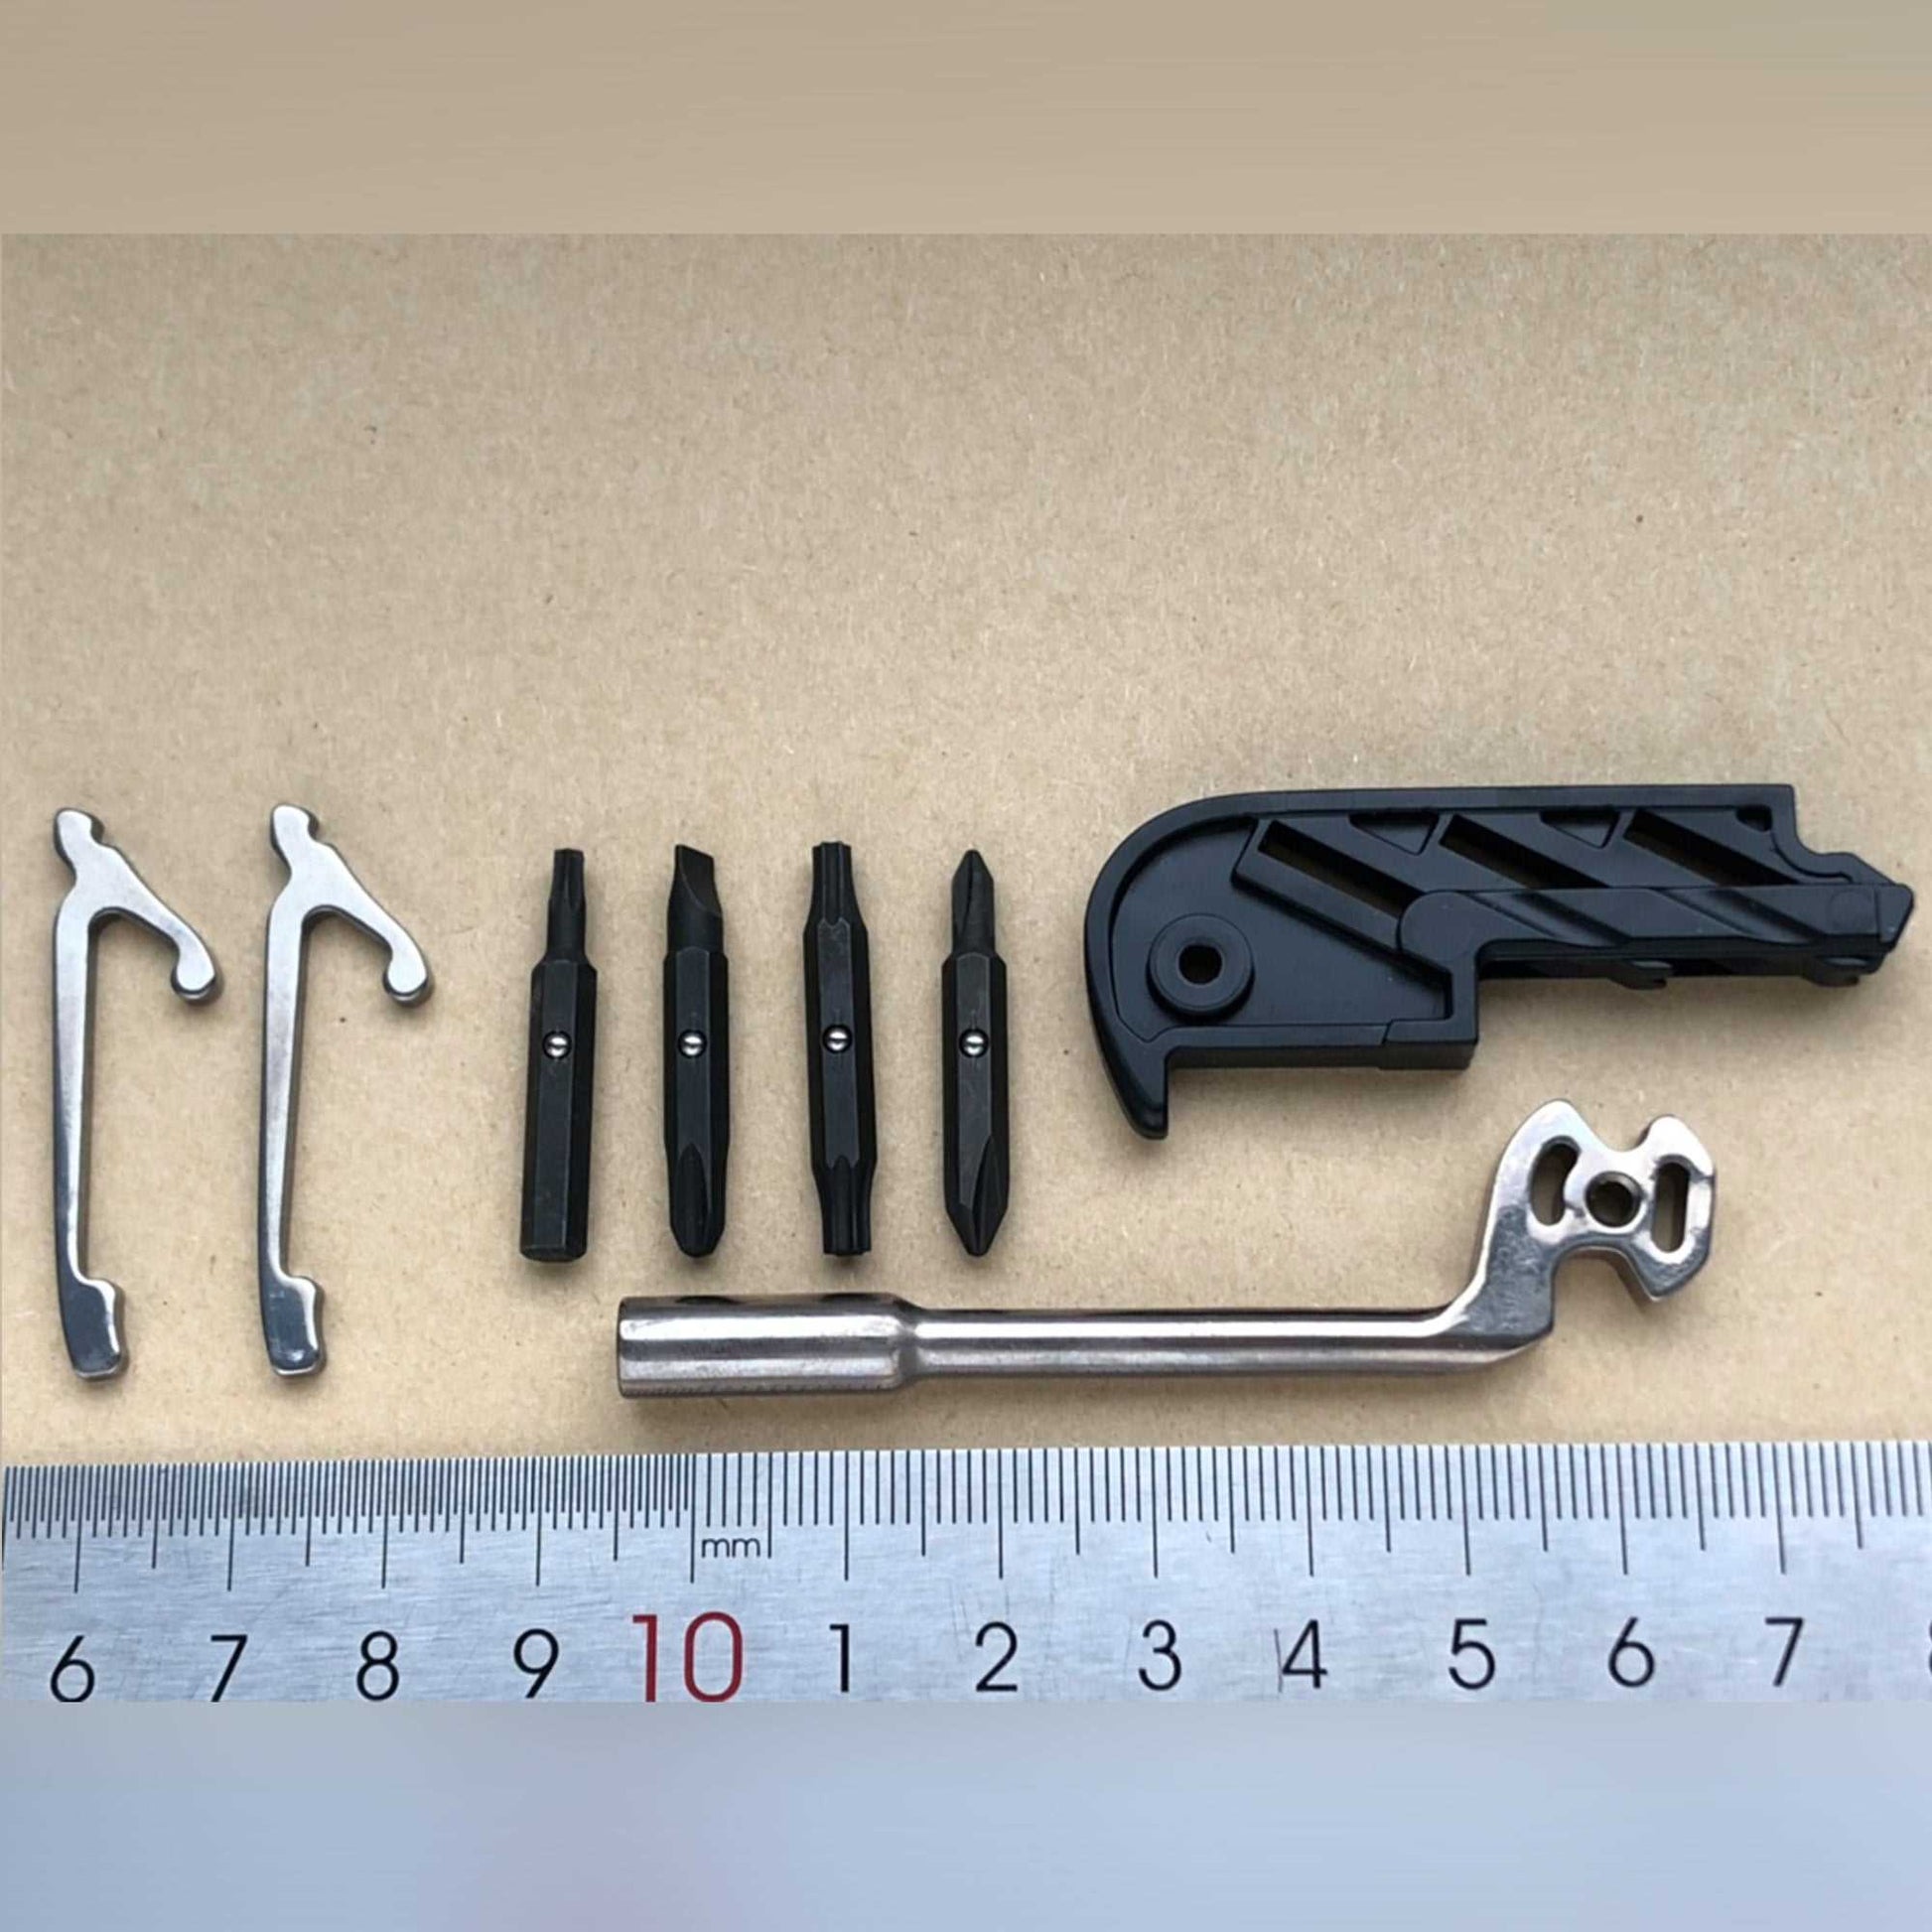 Swiss Army Knife Repair Kit